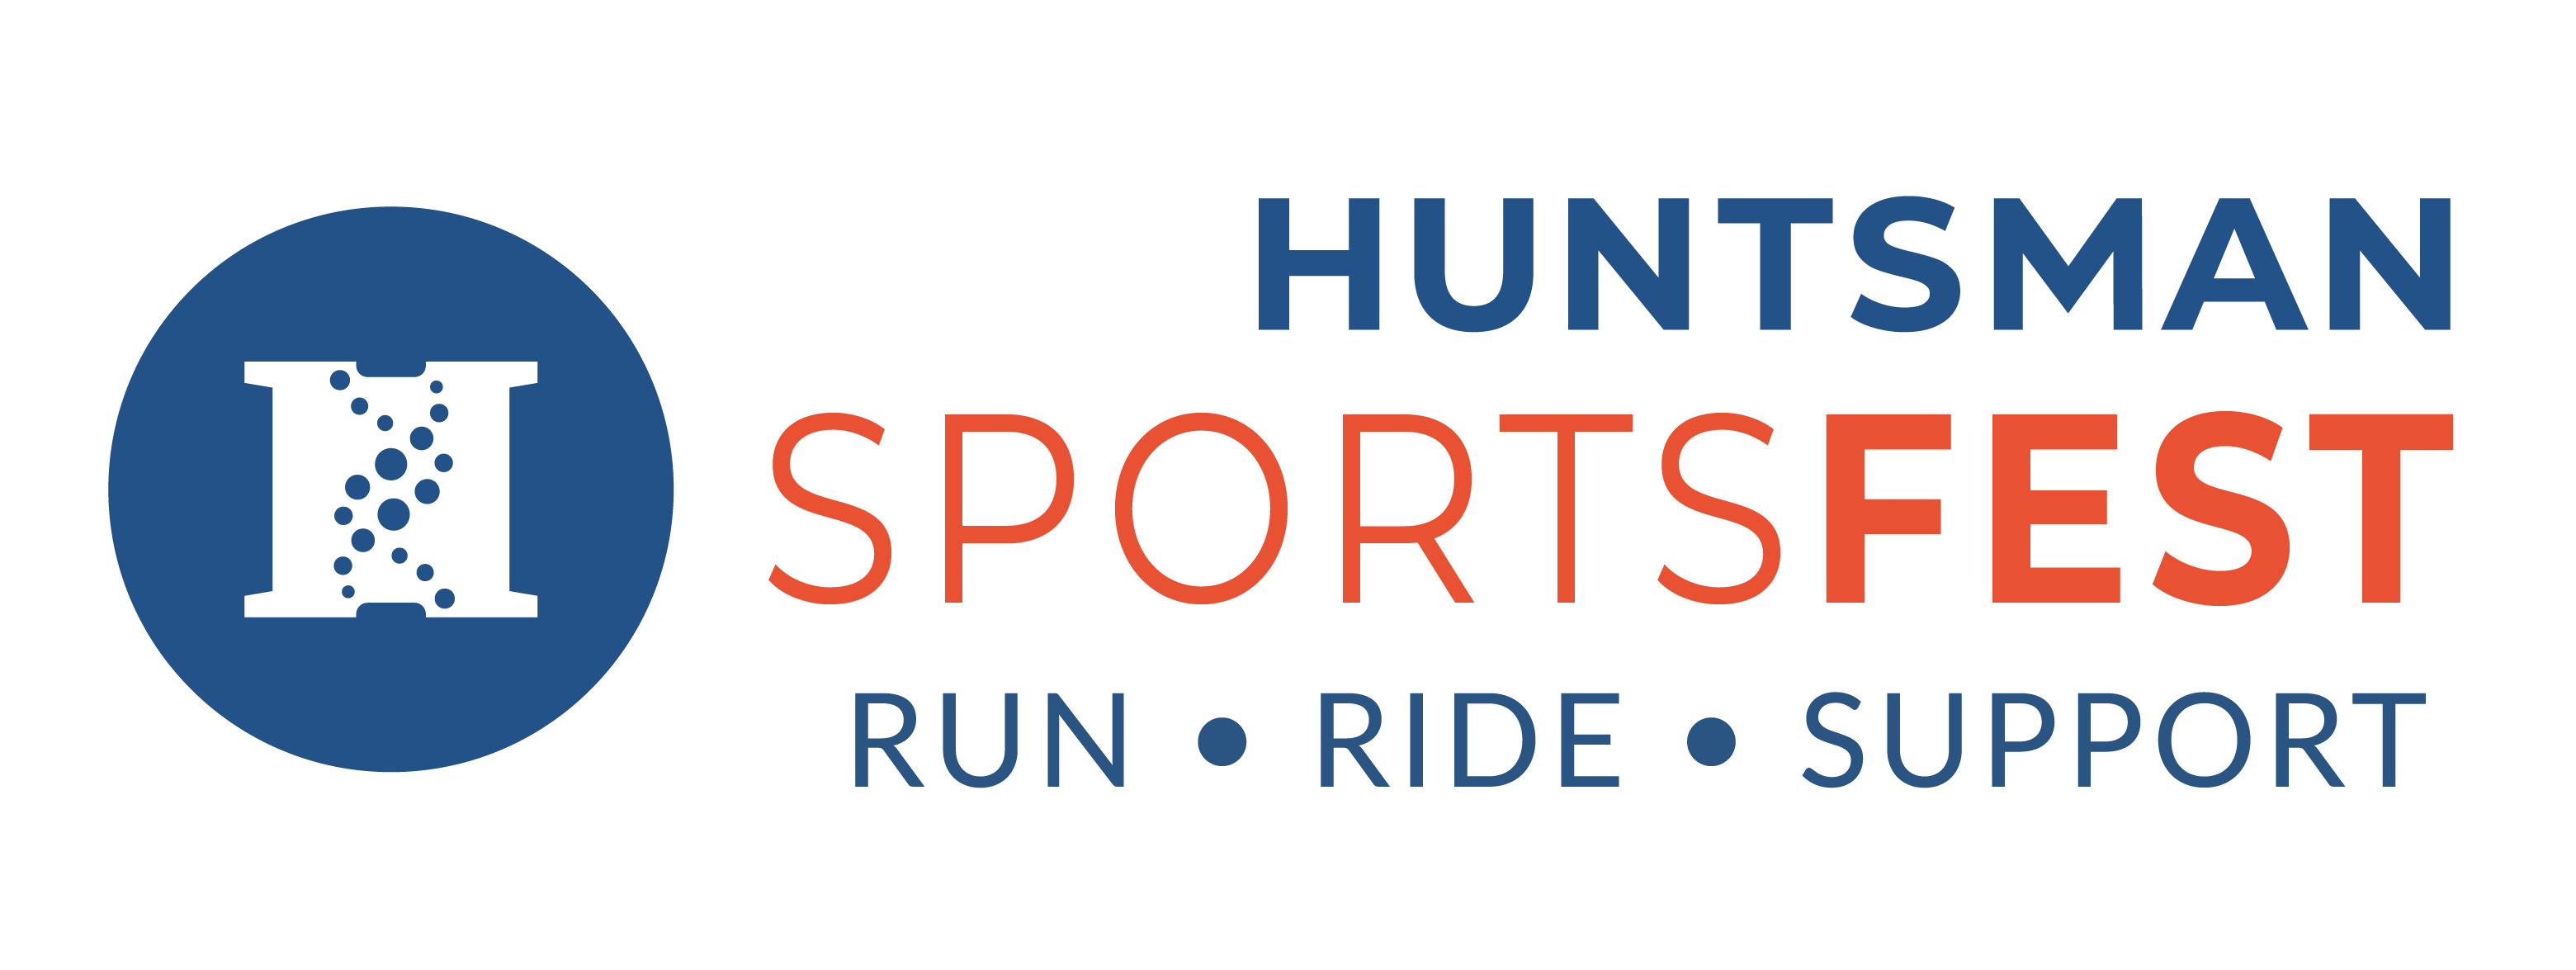 Huntsman Run and Ride